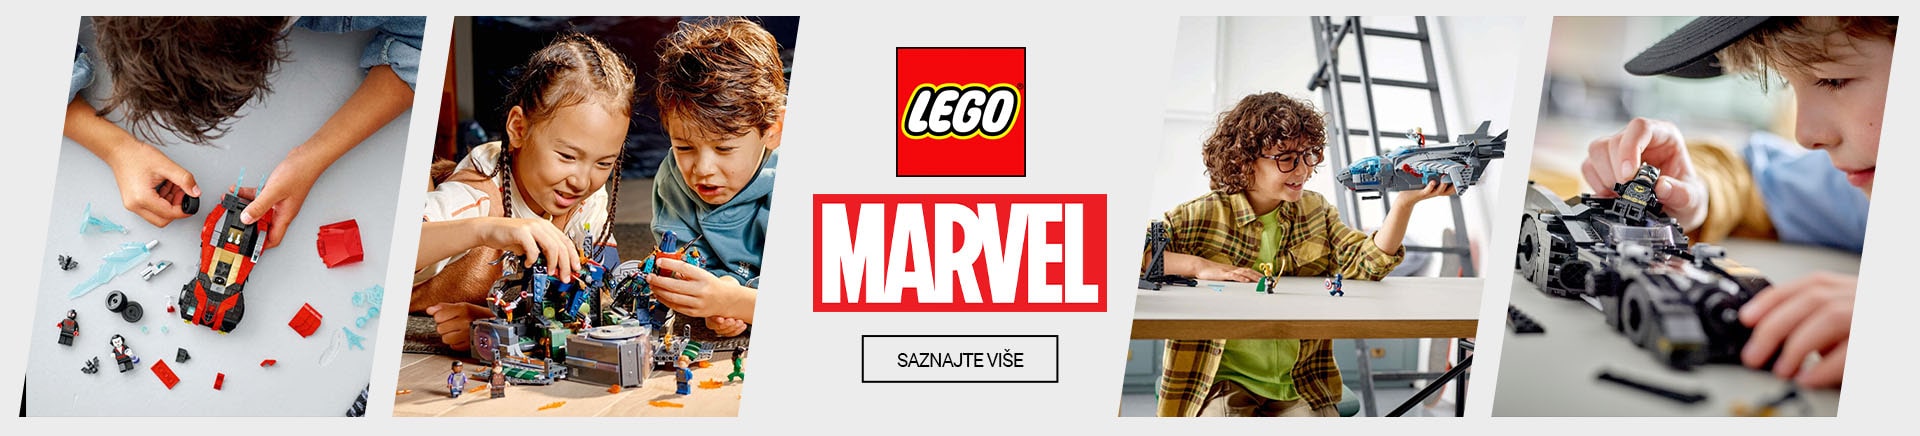 ME Lego MARVEL TABLET 768 X 436-min.jpg